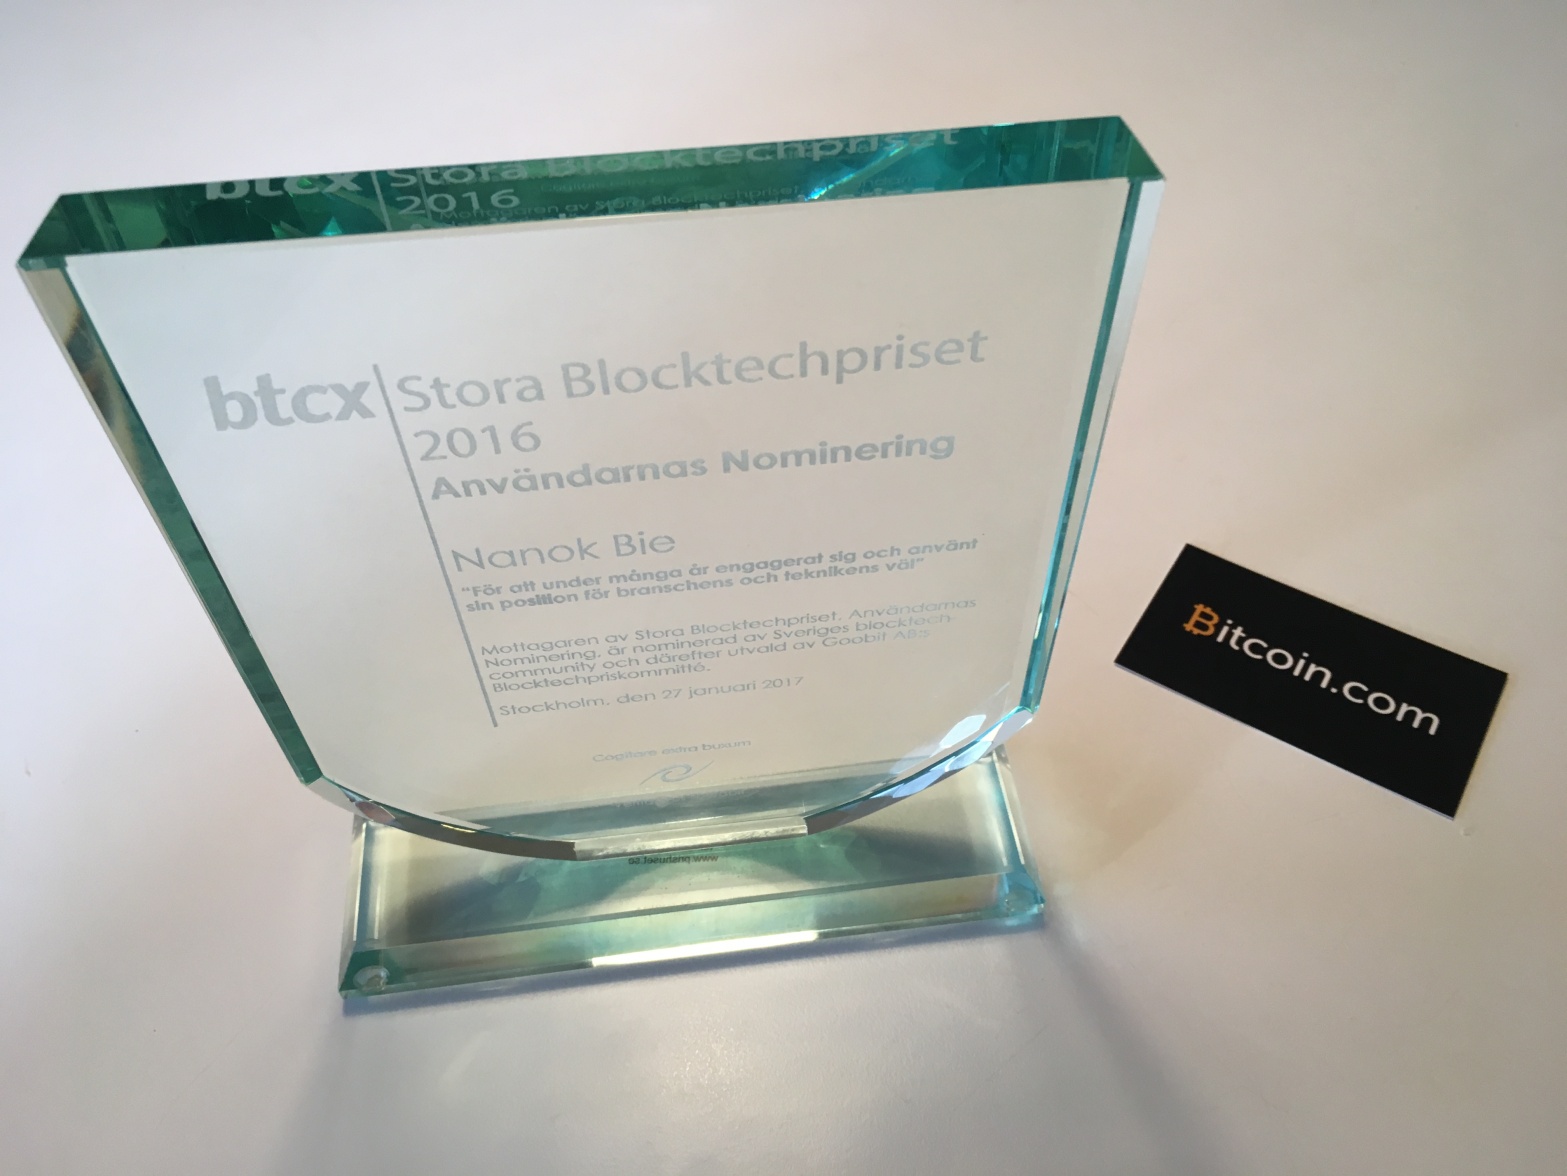 Stora Blocktechpriset 2016